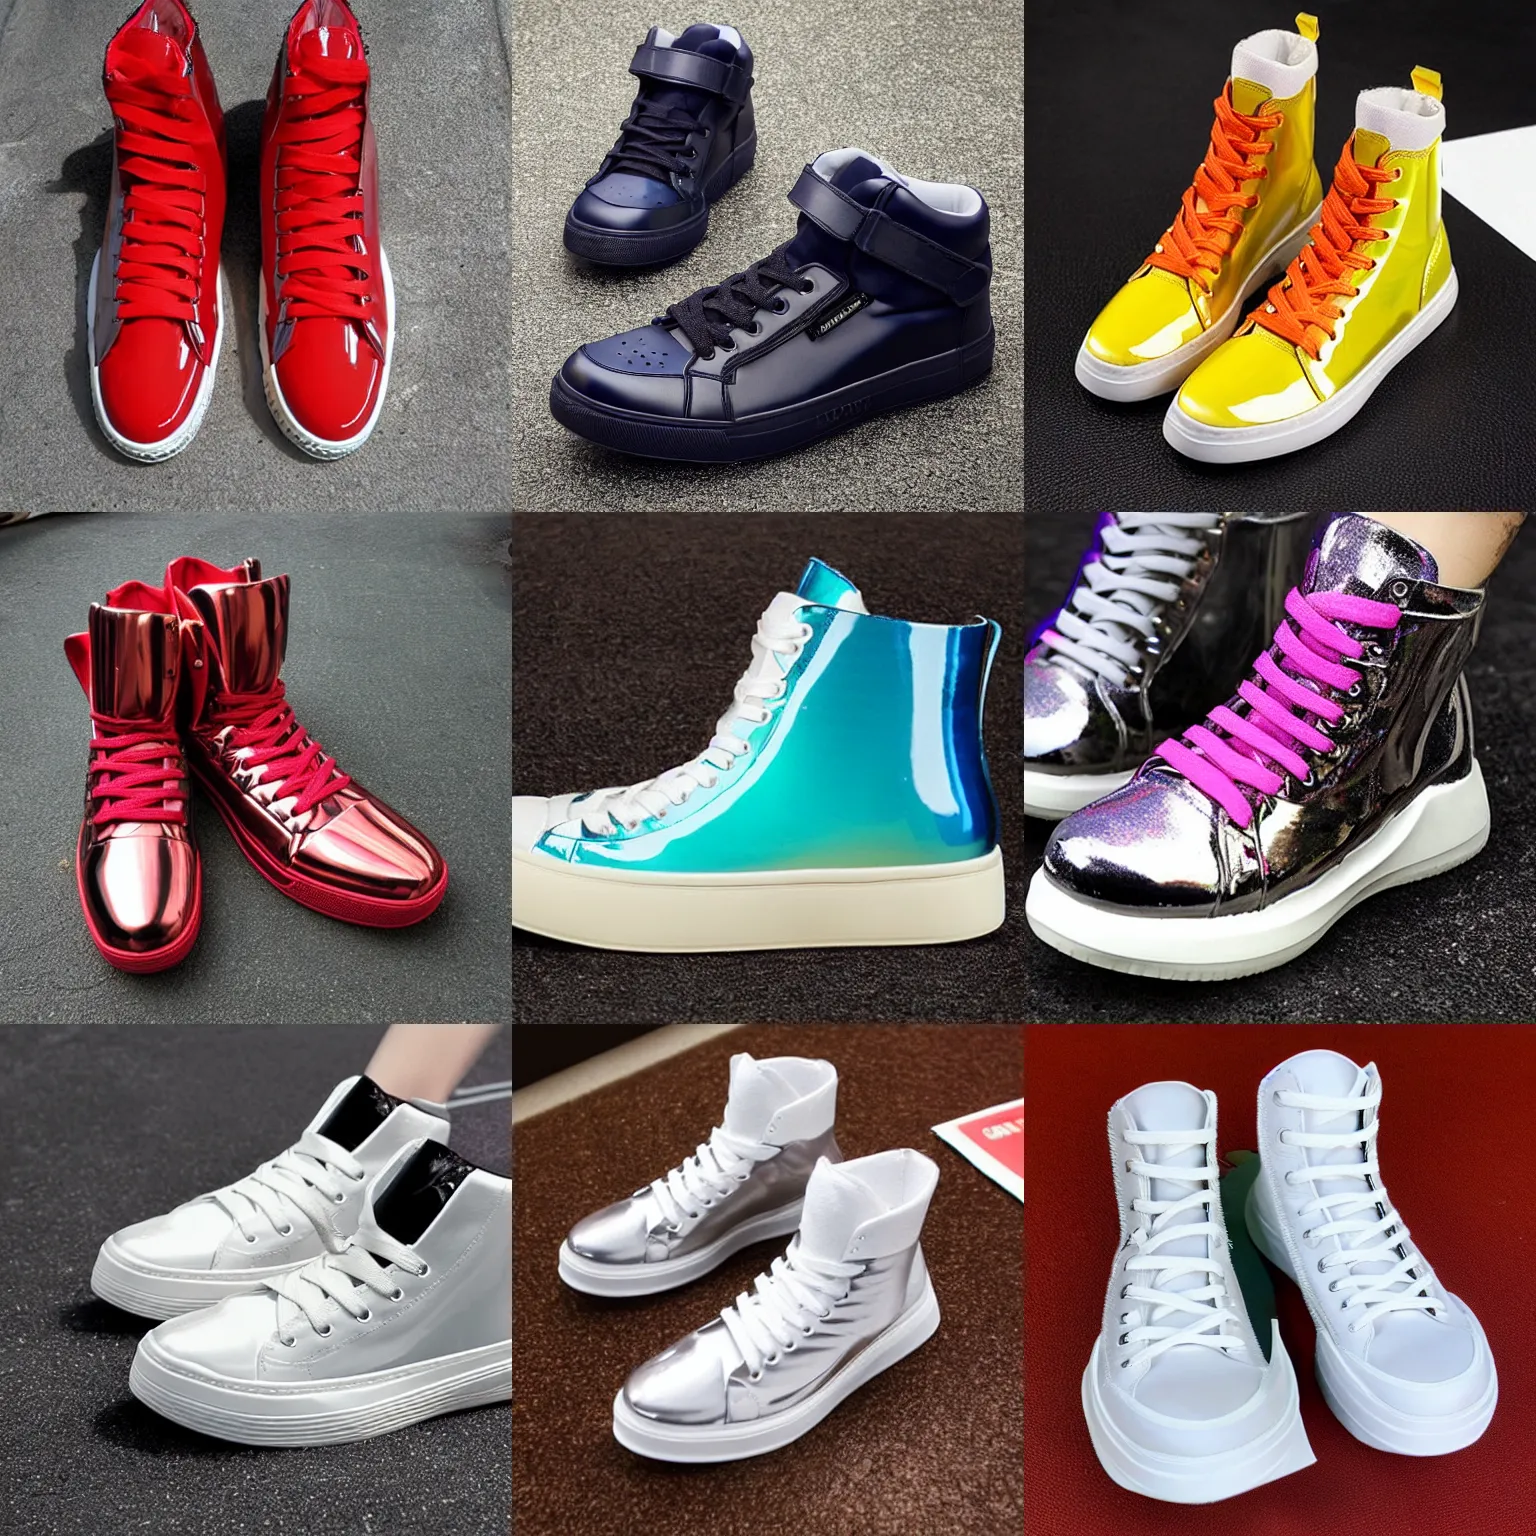 Nike Air Jordan cowboy boots, studio lighting, 8k, Stable Diffusion